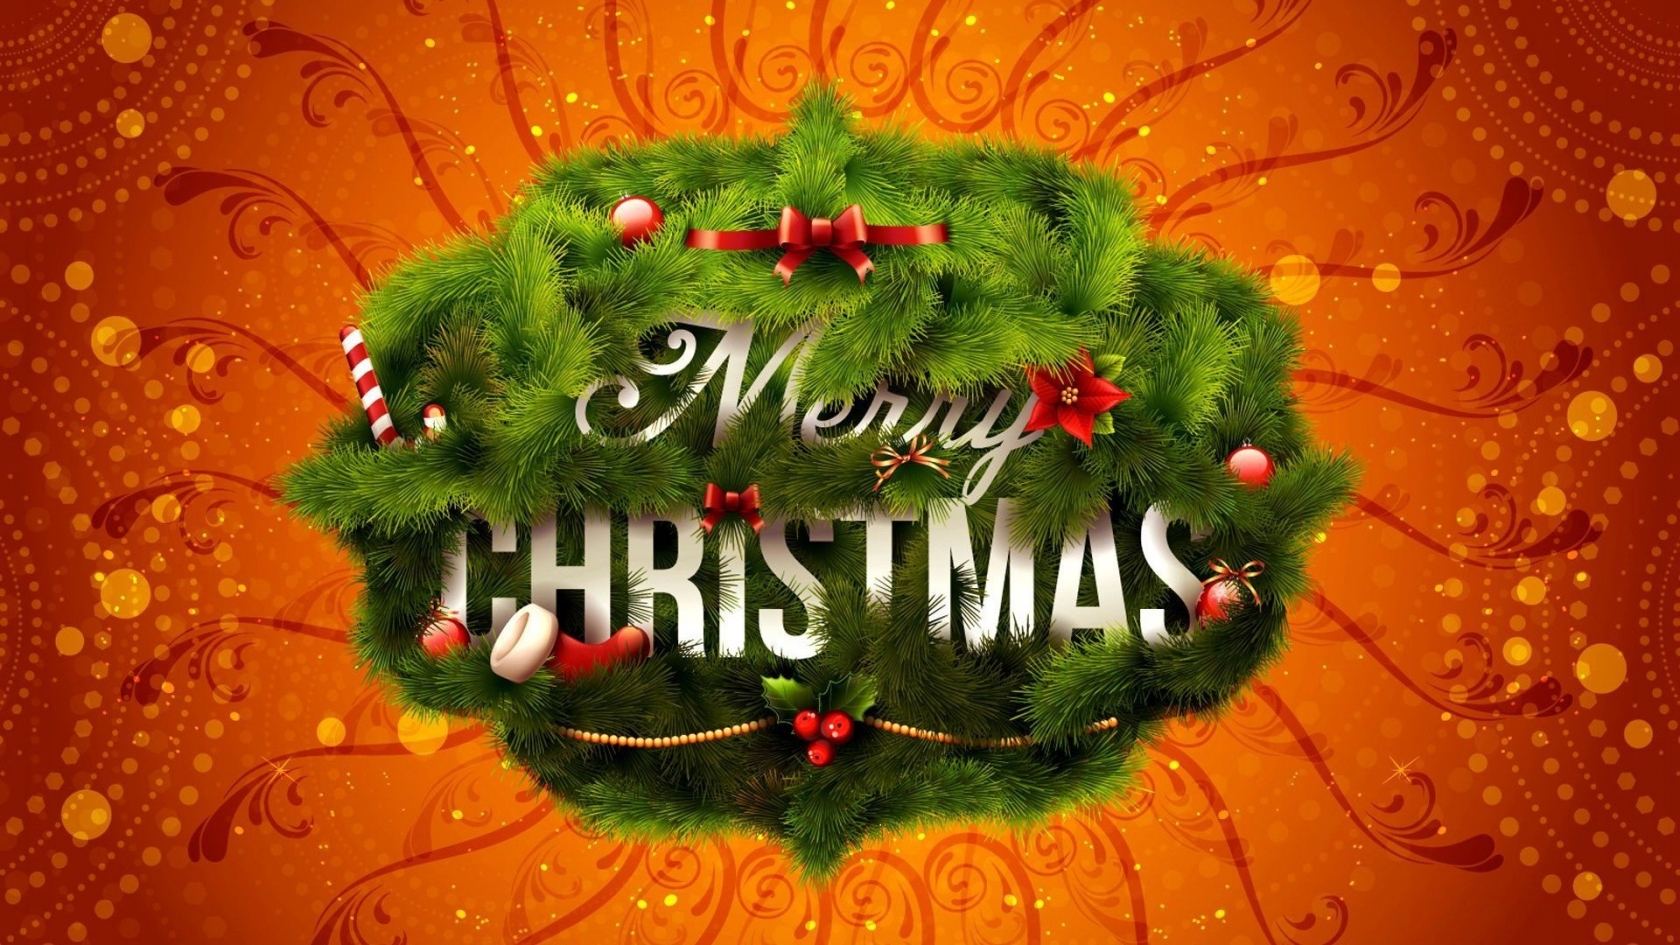 Merry Christmas Wreath for 1680 x 945 HDTV resolution